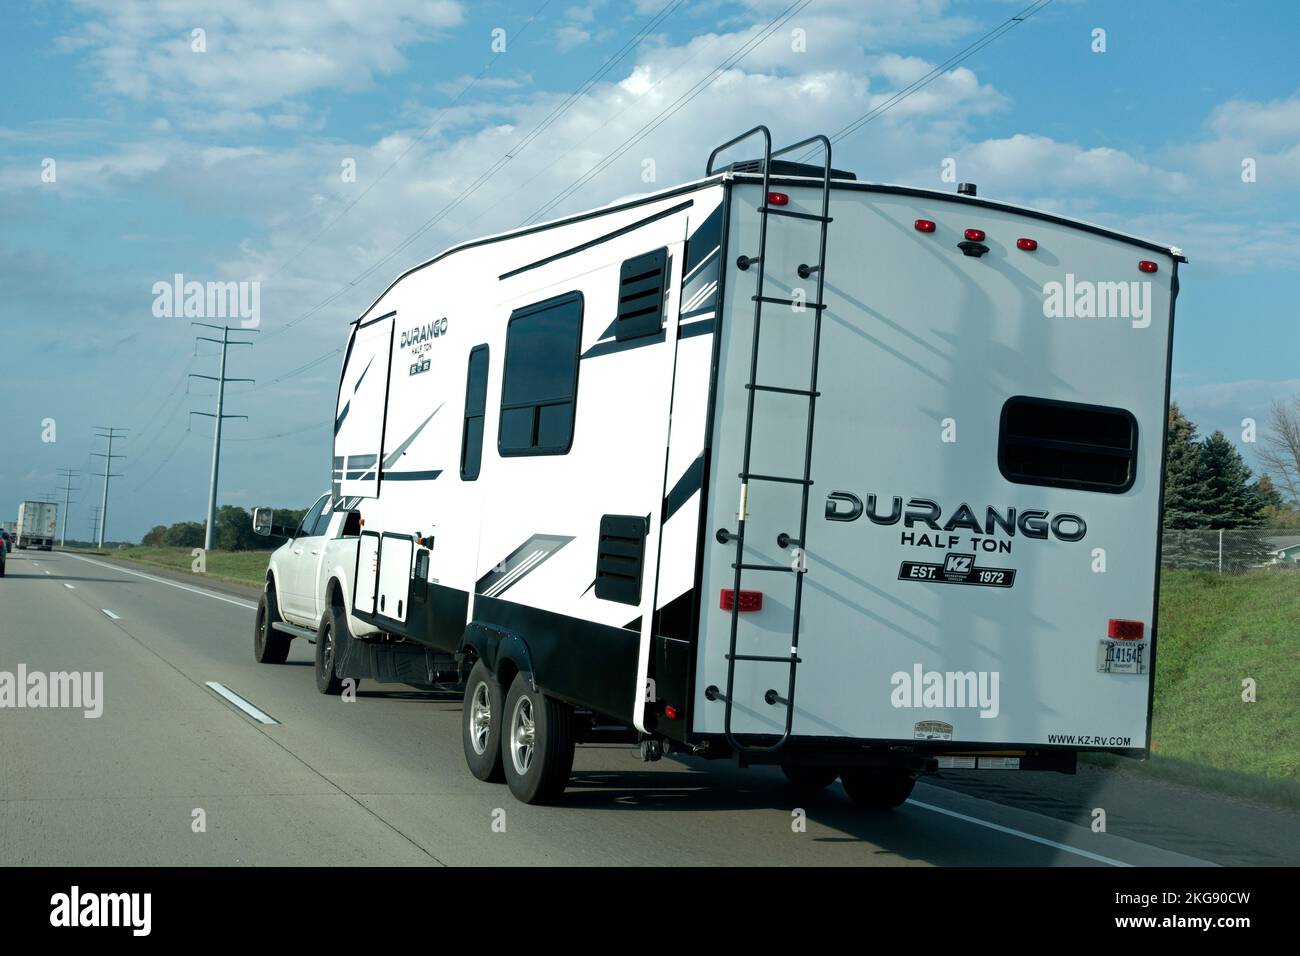 Durango travel trailer on the highway. Minneapolis Minnesota MN USA Stock Photo